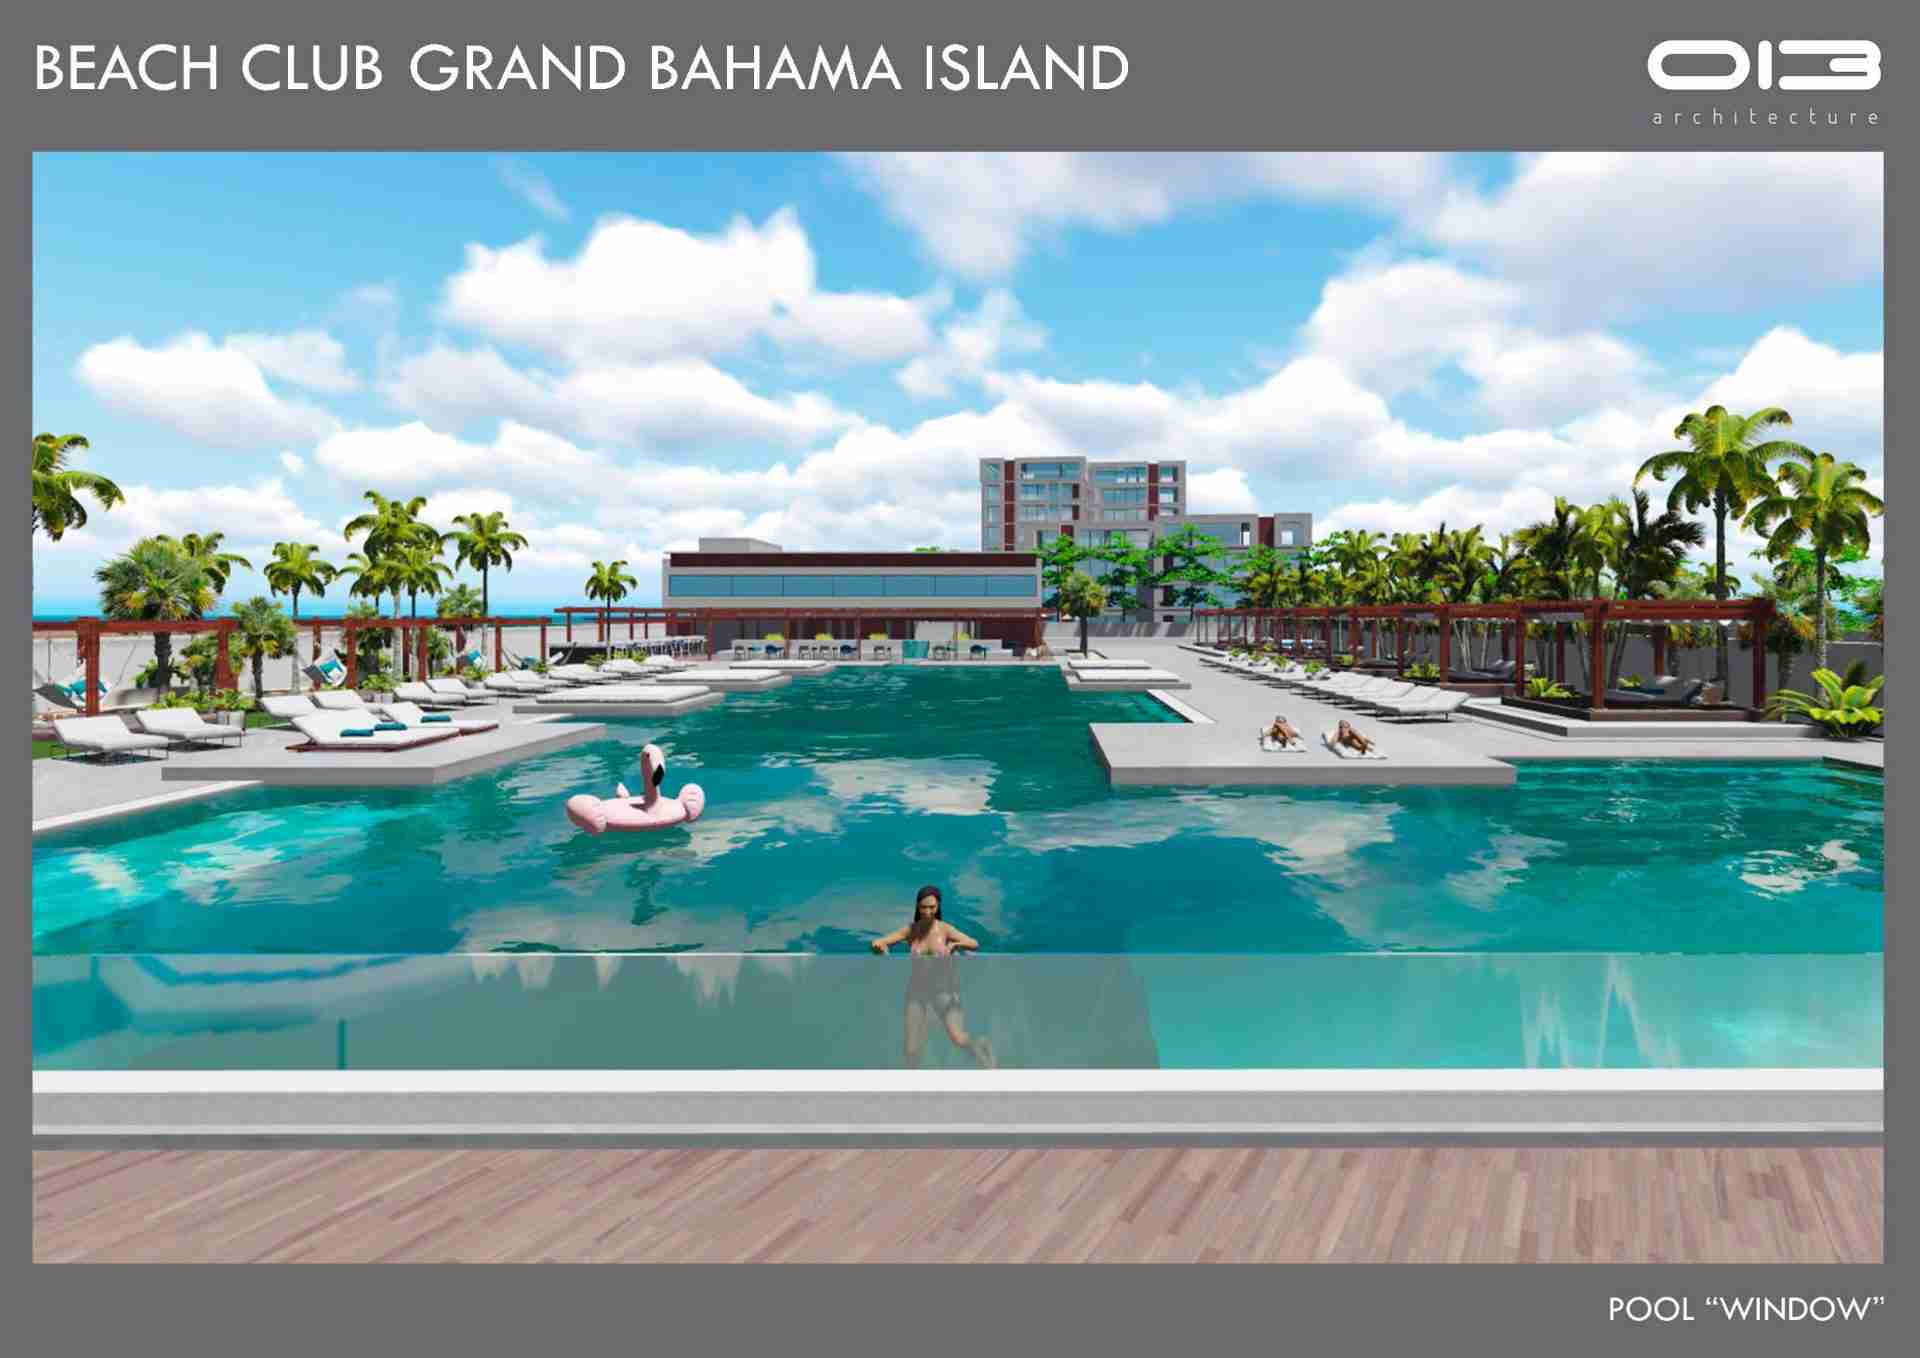 beach-club-grand-bahama-island-oib-architektur-seite-15-skaliert